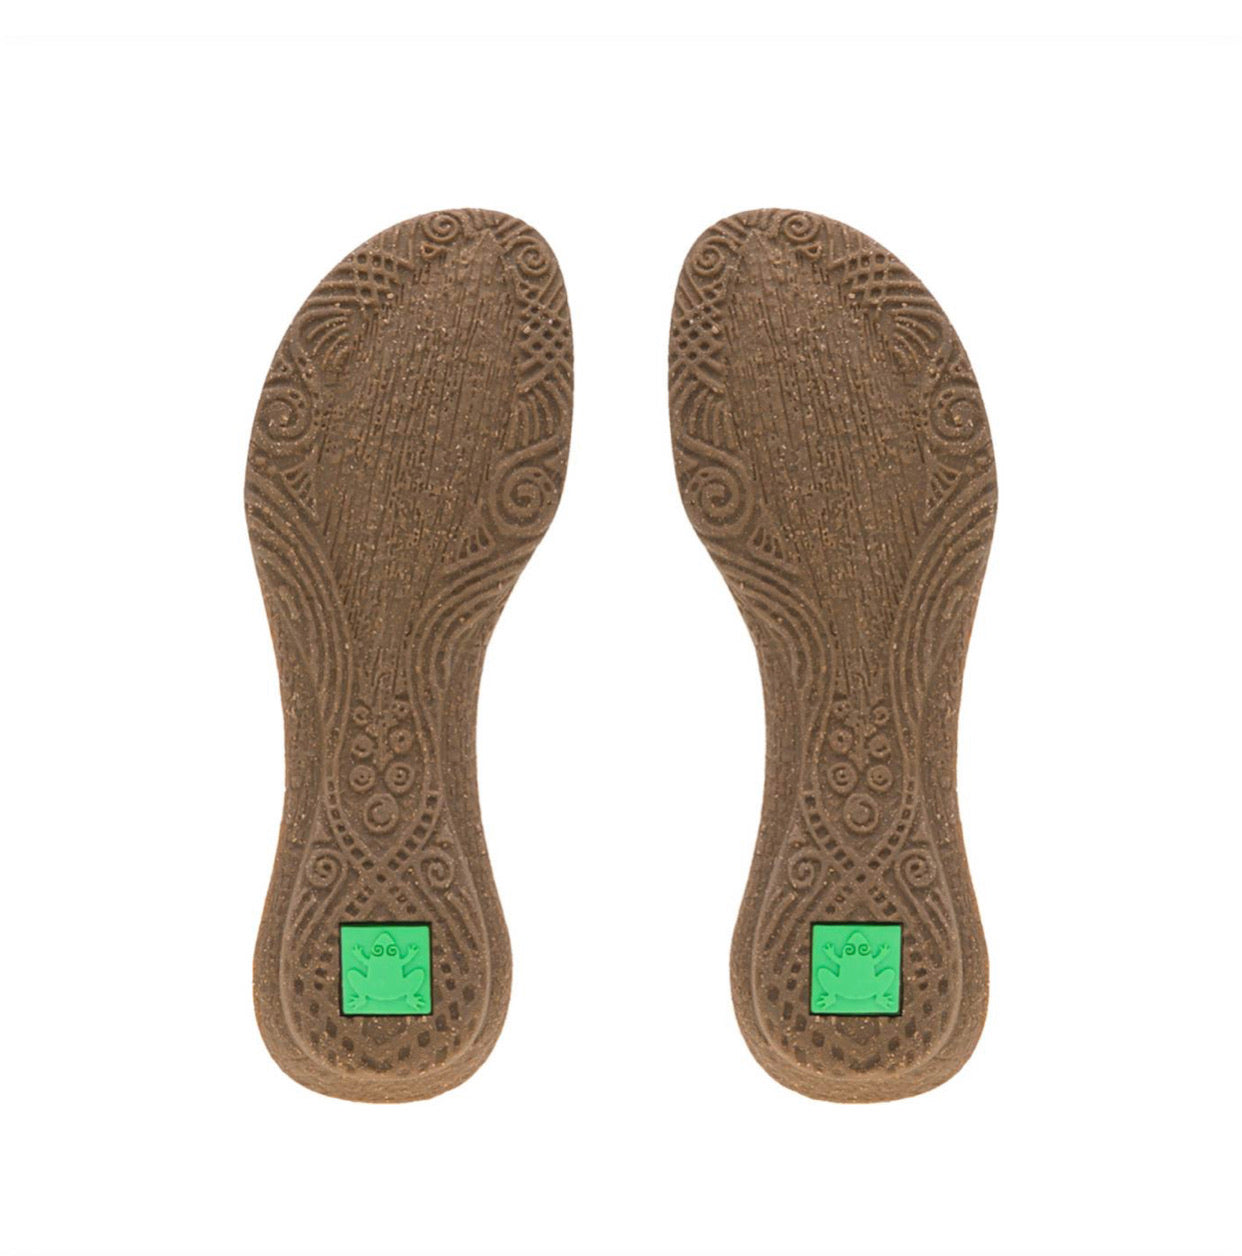 El Naturalista 5063 Wood Light Tan Flats Sandals Made In Spain